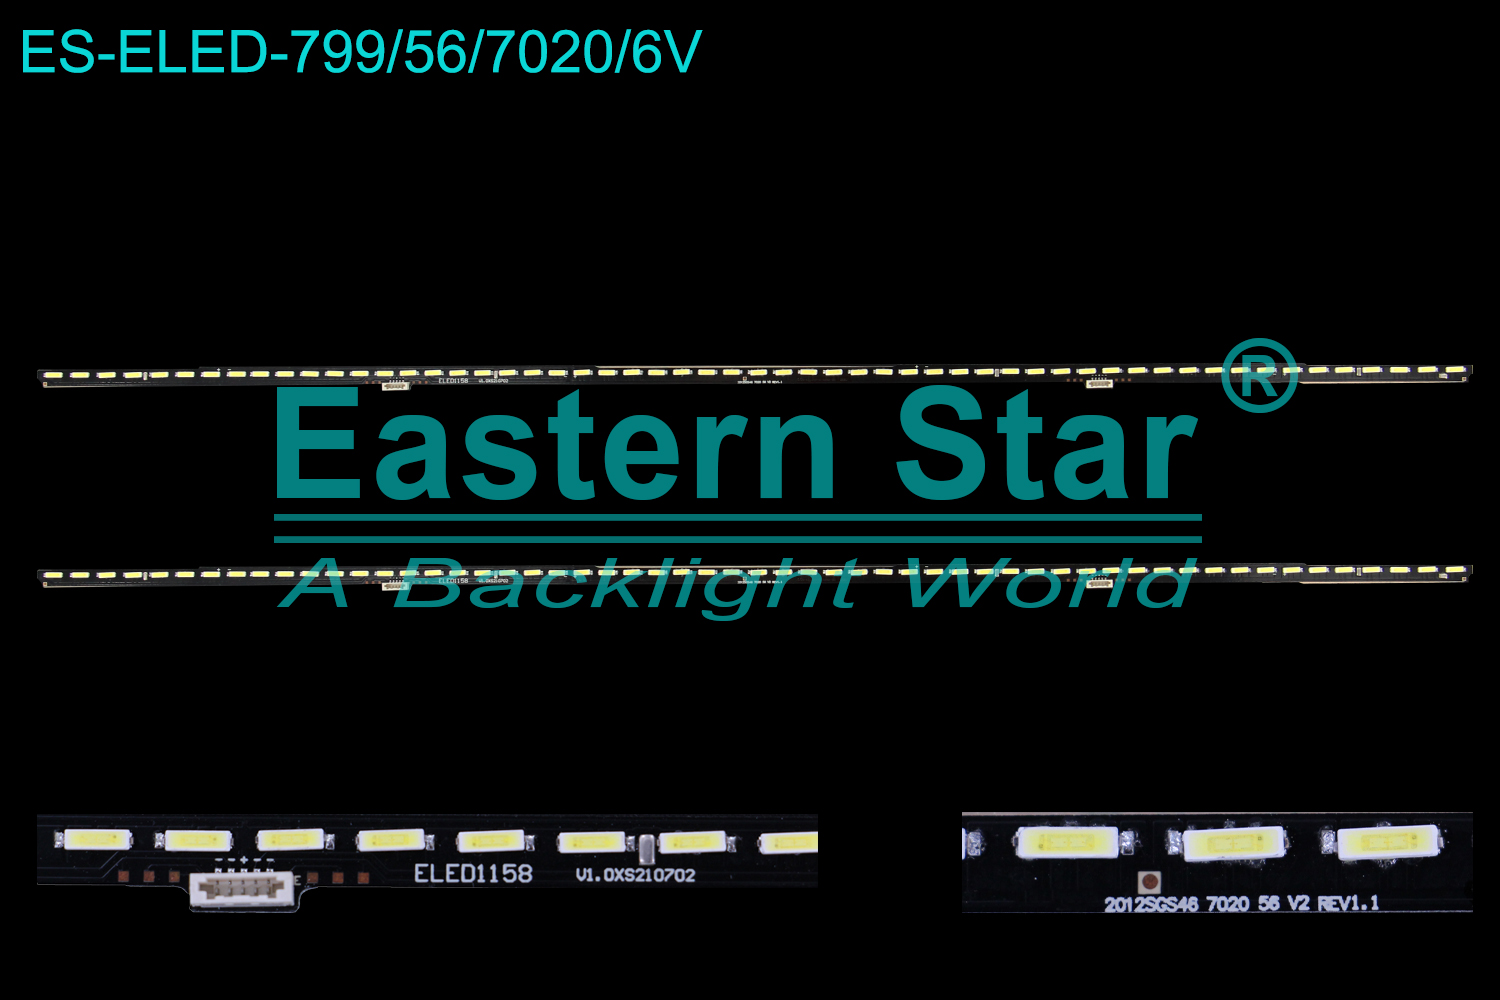 ES-ELED-799 ELED/EDGE TV backlight use for 46'' Samsung UE46B7100WW ELED1158, 2012SGS46 7020 56 V2 REV1.1 LED STRIPS(2)